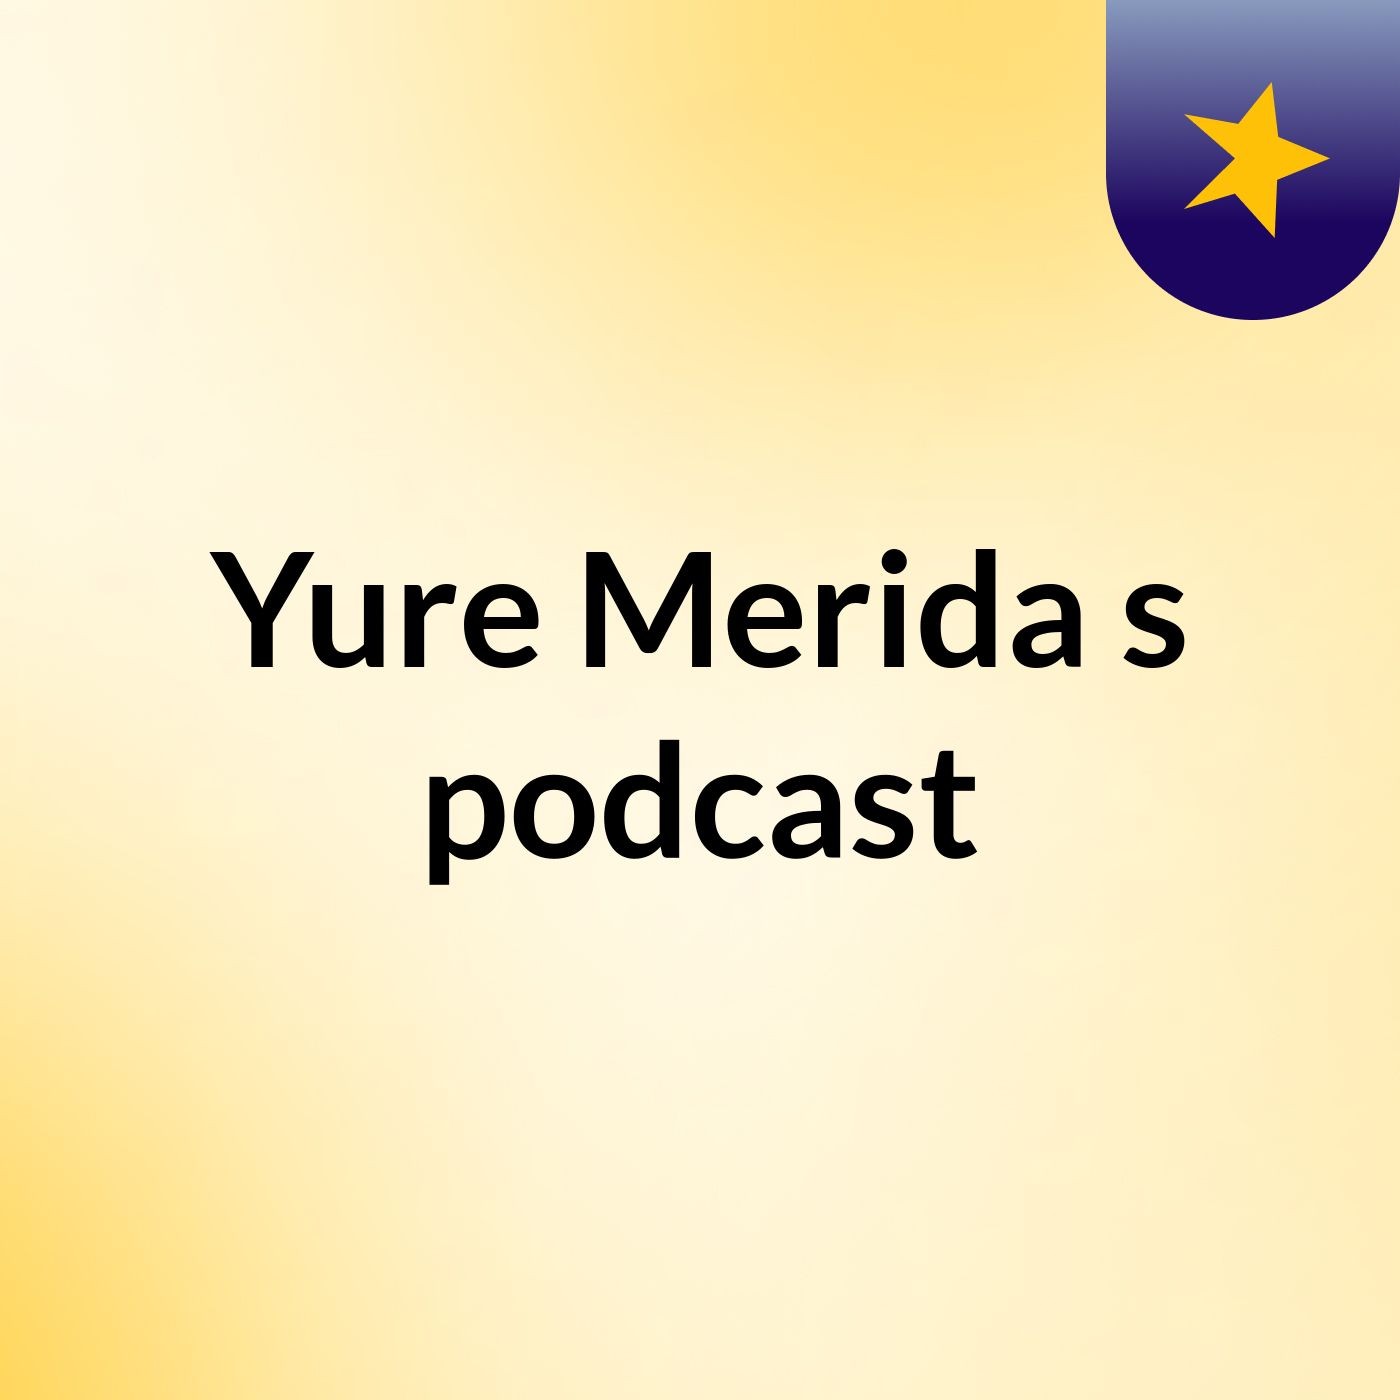 Yure Merida's podcast